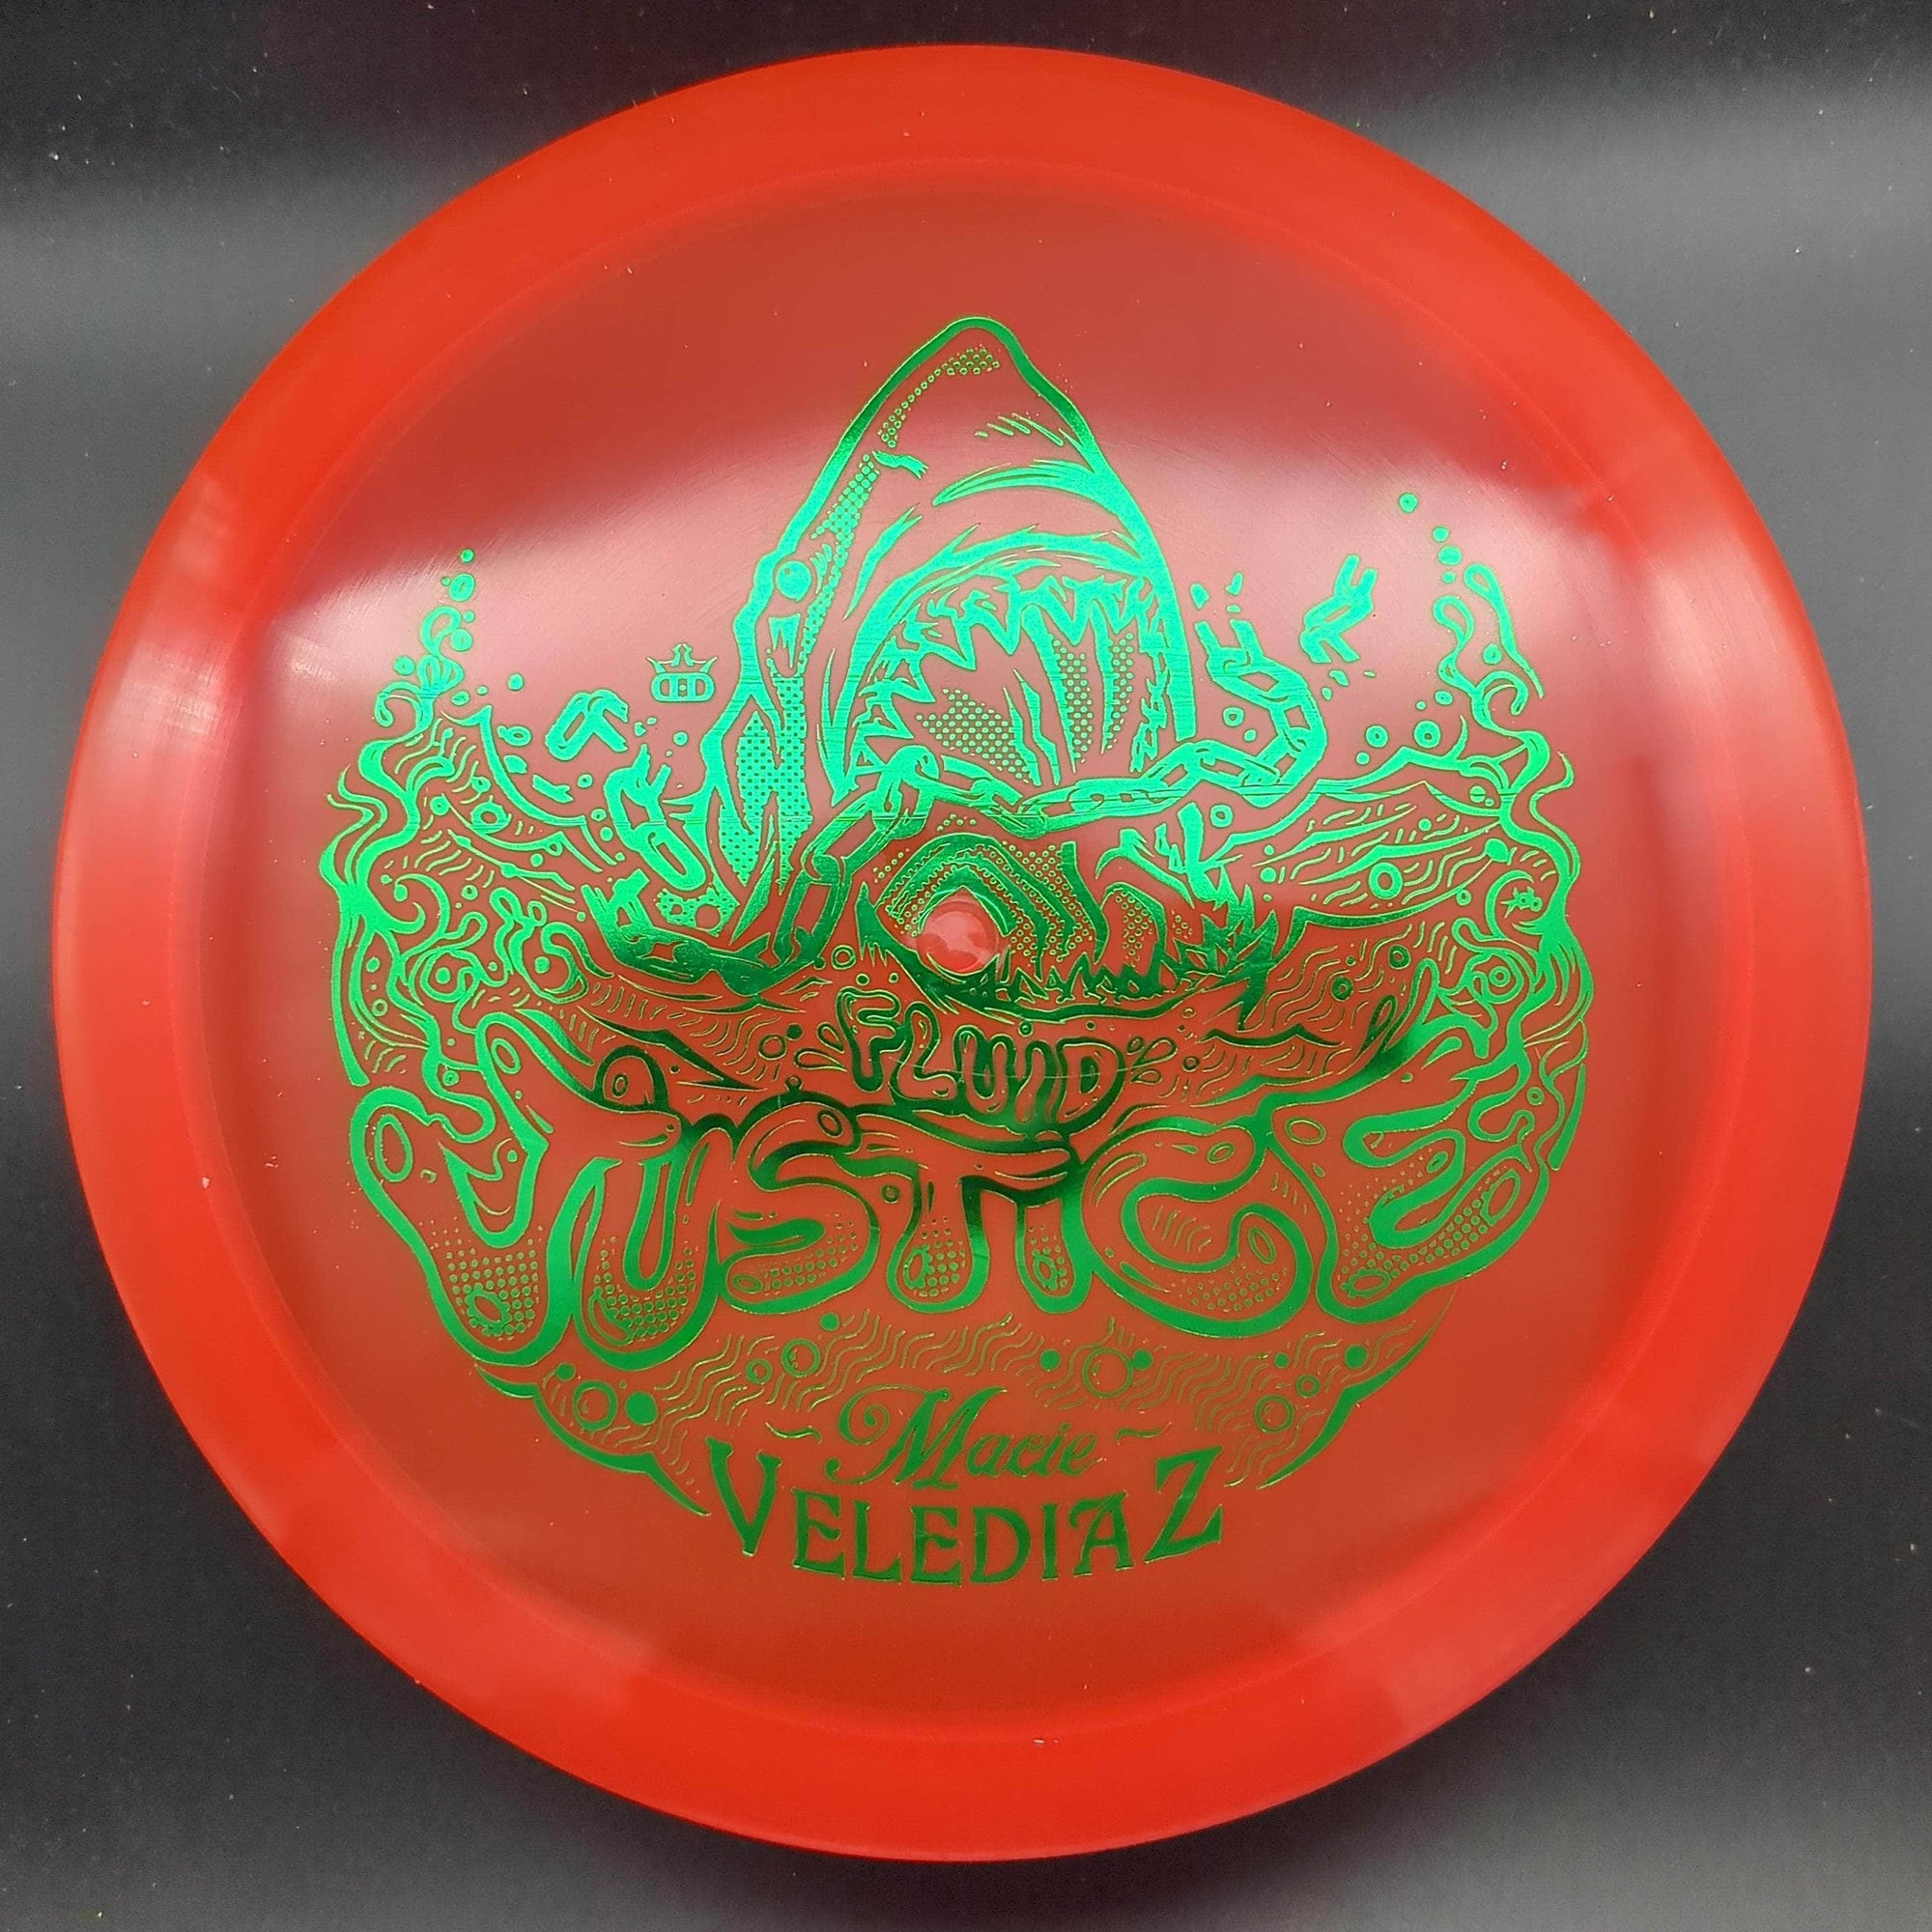 Dynamic Discs Mid Range Red Green Stamp 175g Justice, Fluid, Macie Velediaz 2023